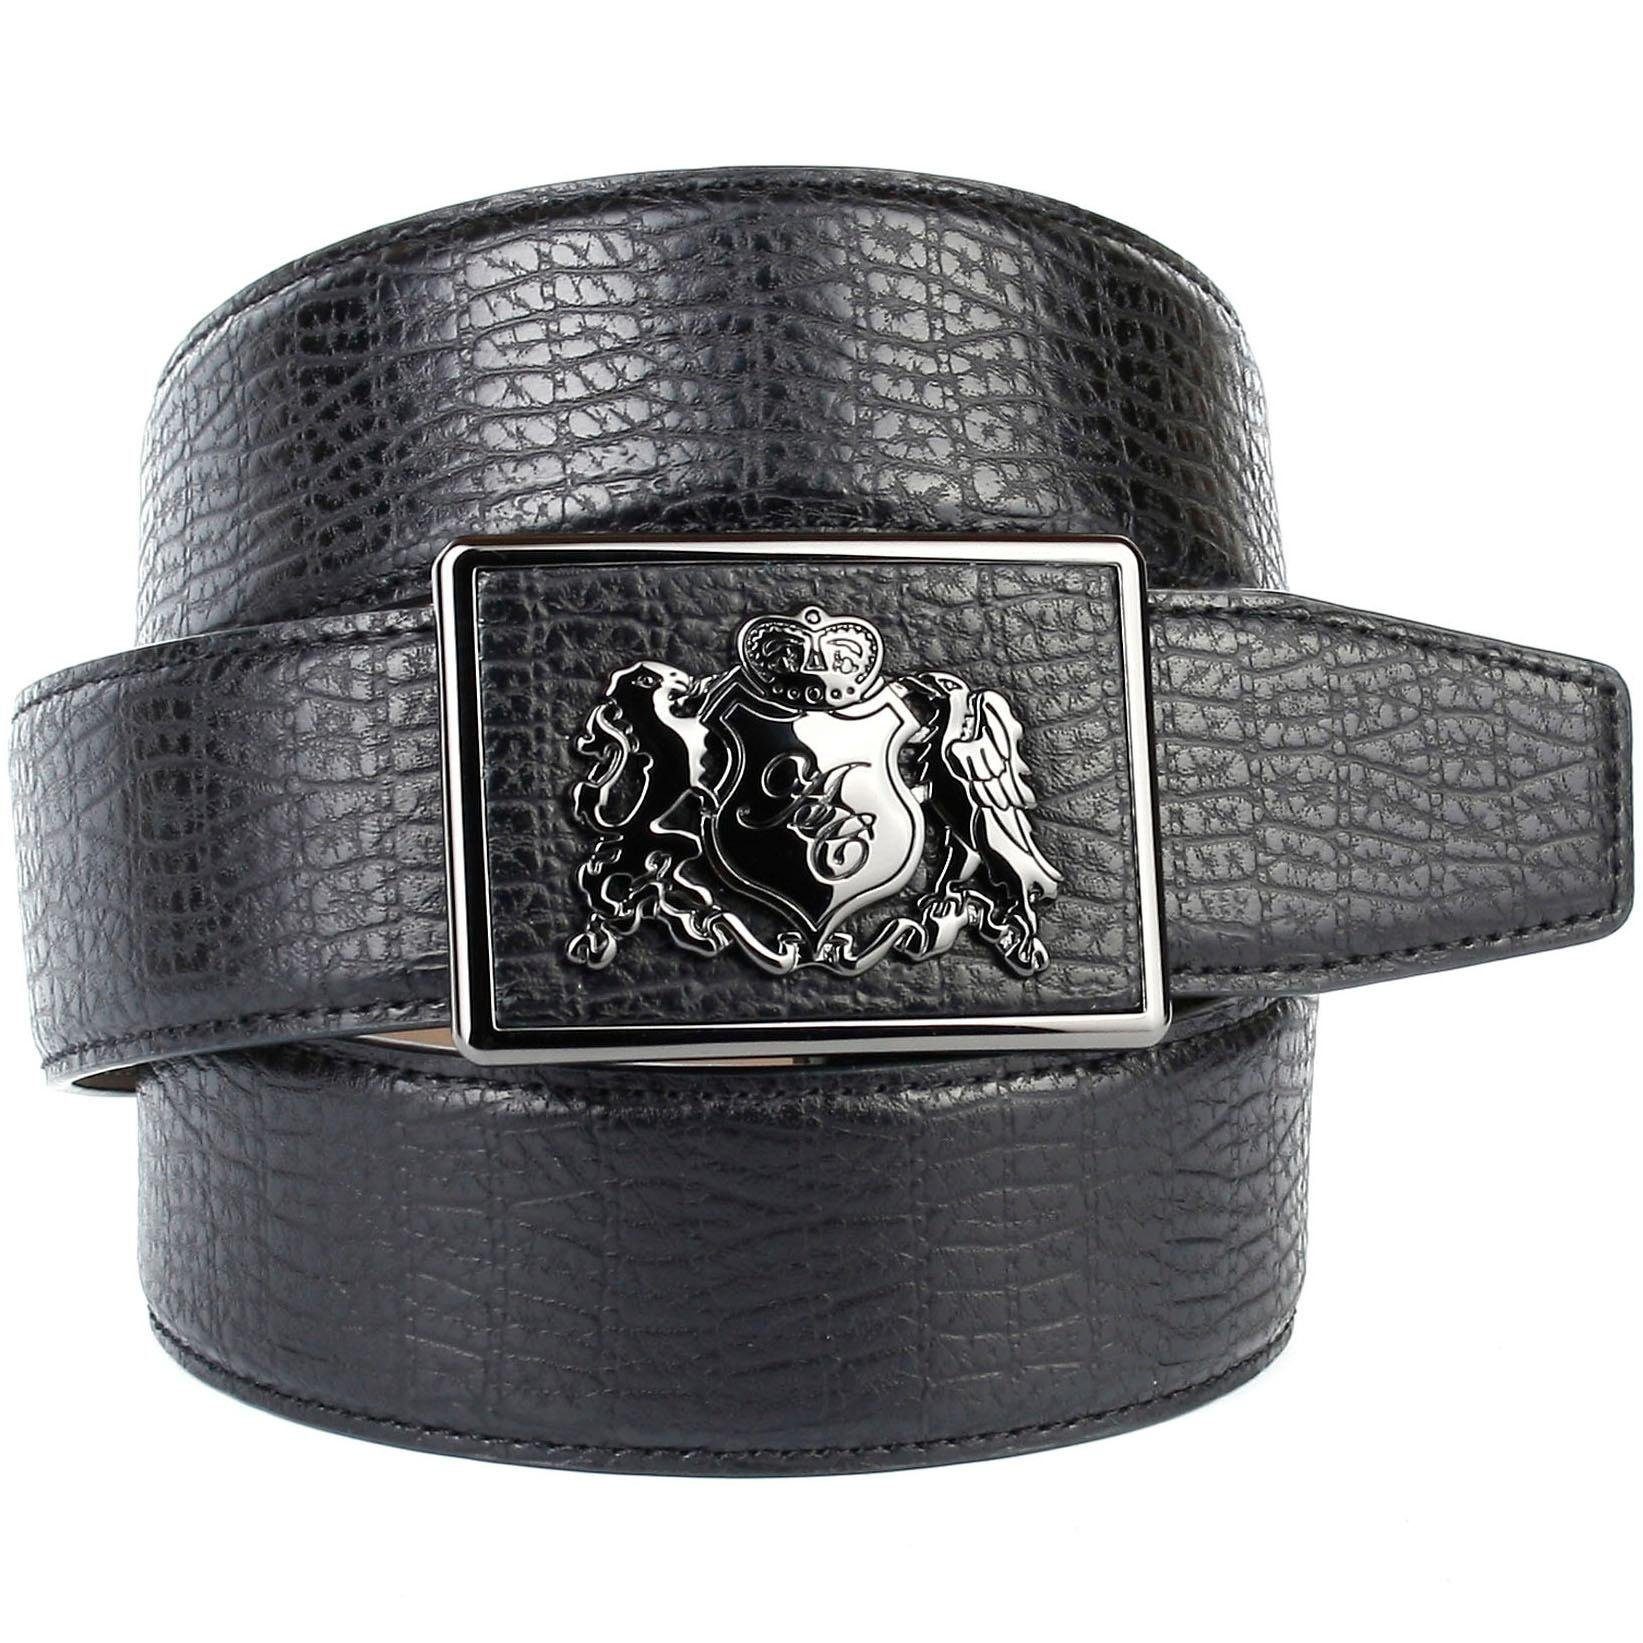 Anthoni Crown Ledergürtel mit Anthoni Crown Wappen, Lochmuster am Rand